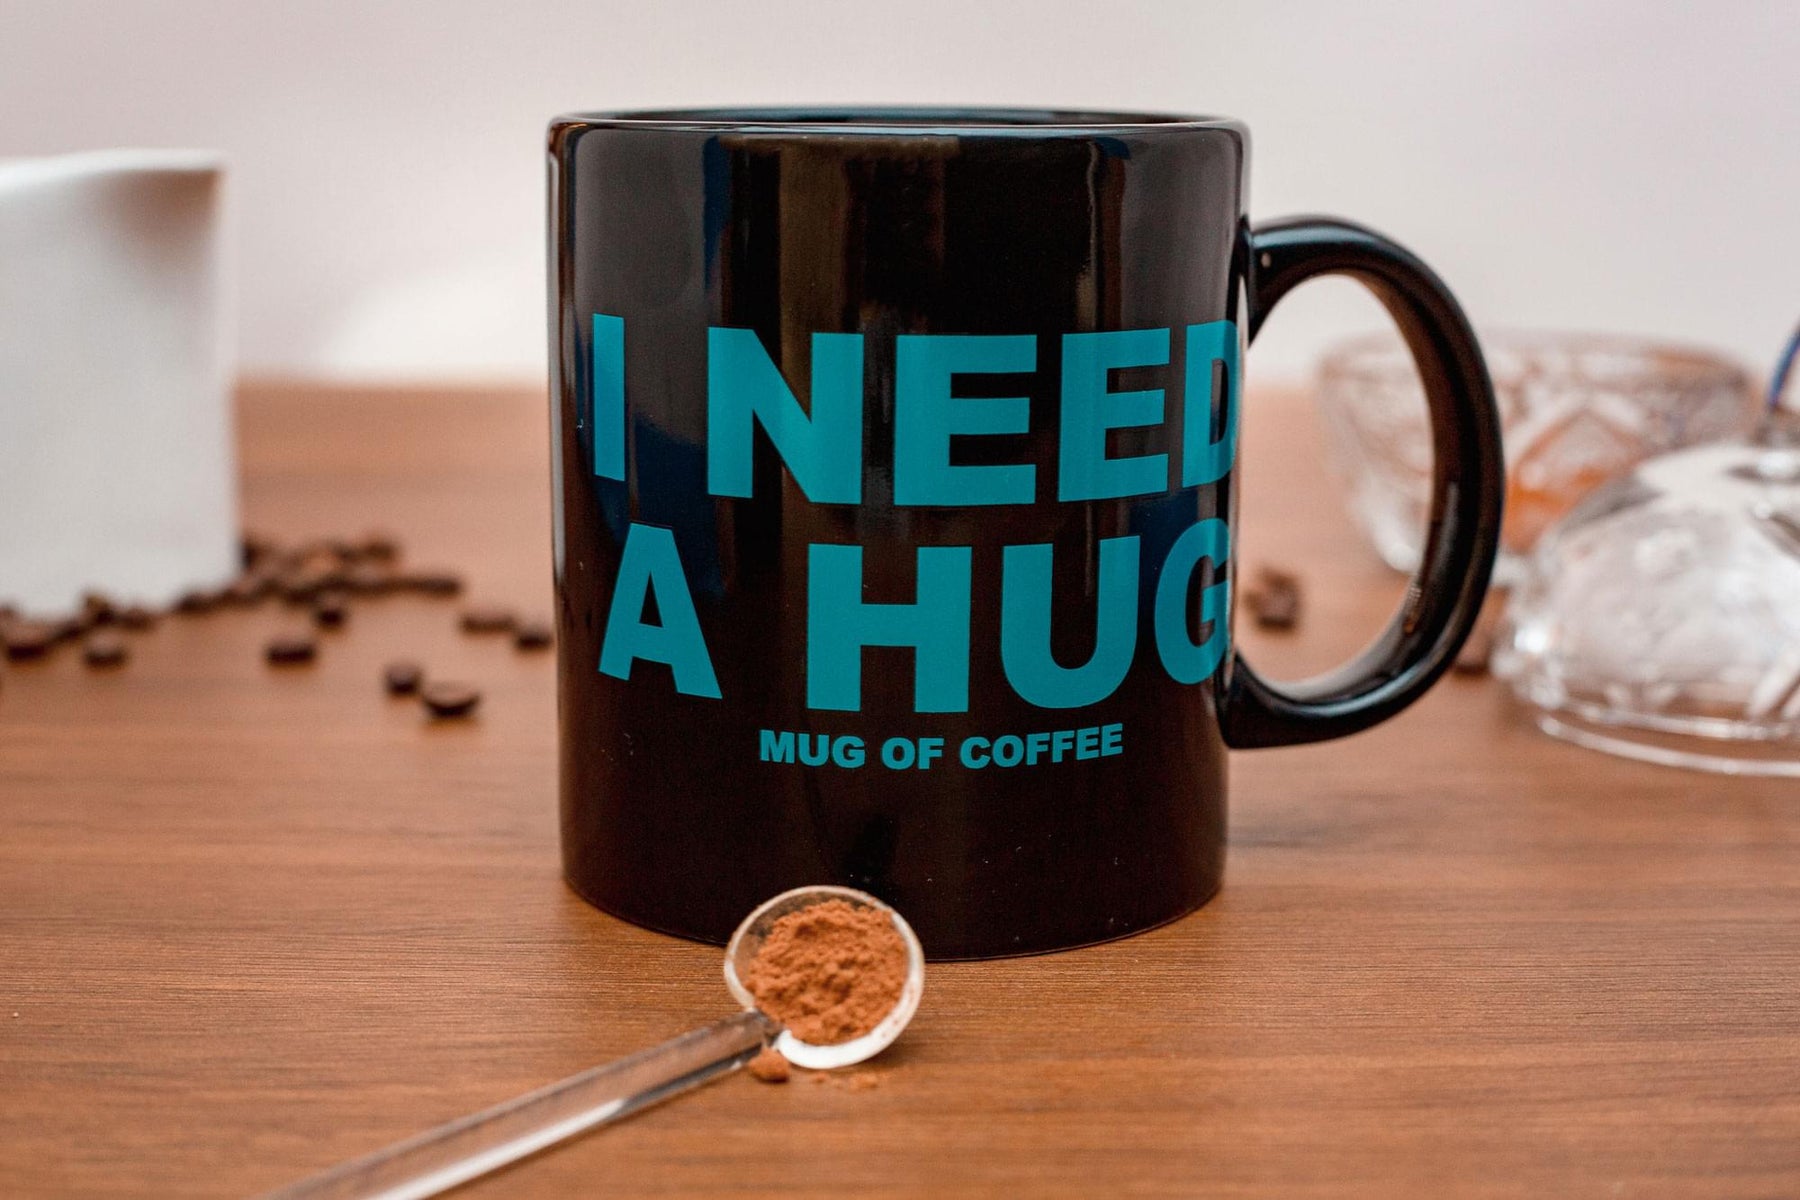 "I Need a HUGe Mug of Coffee" Ceramic Mug | Large Coffee Mug | 20 Ounces